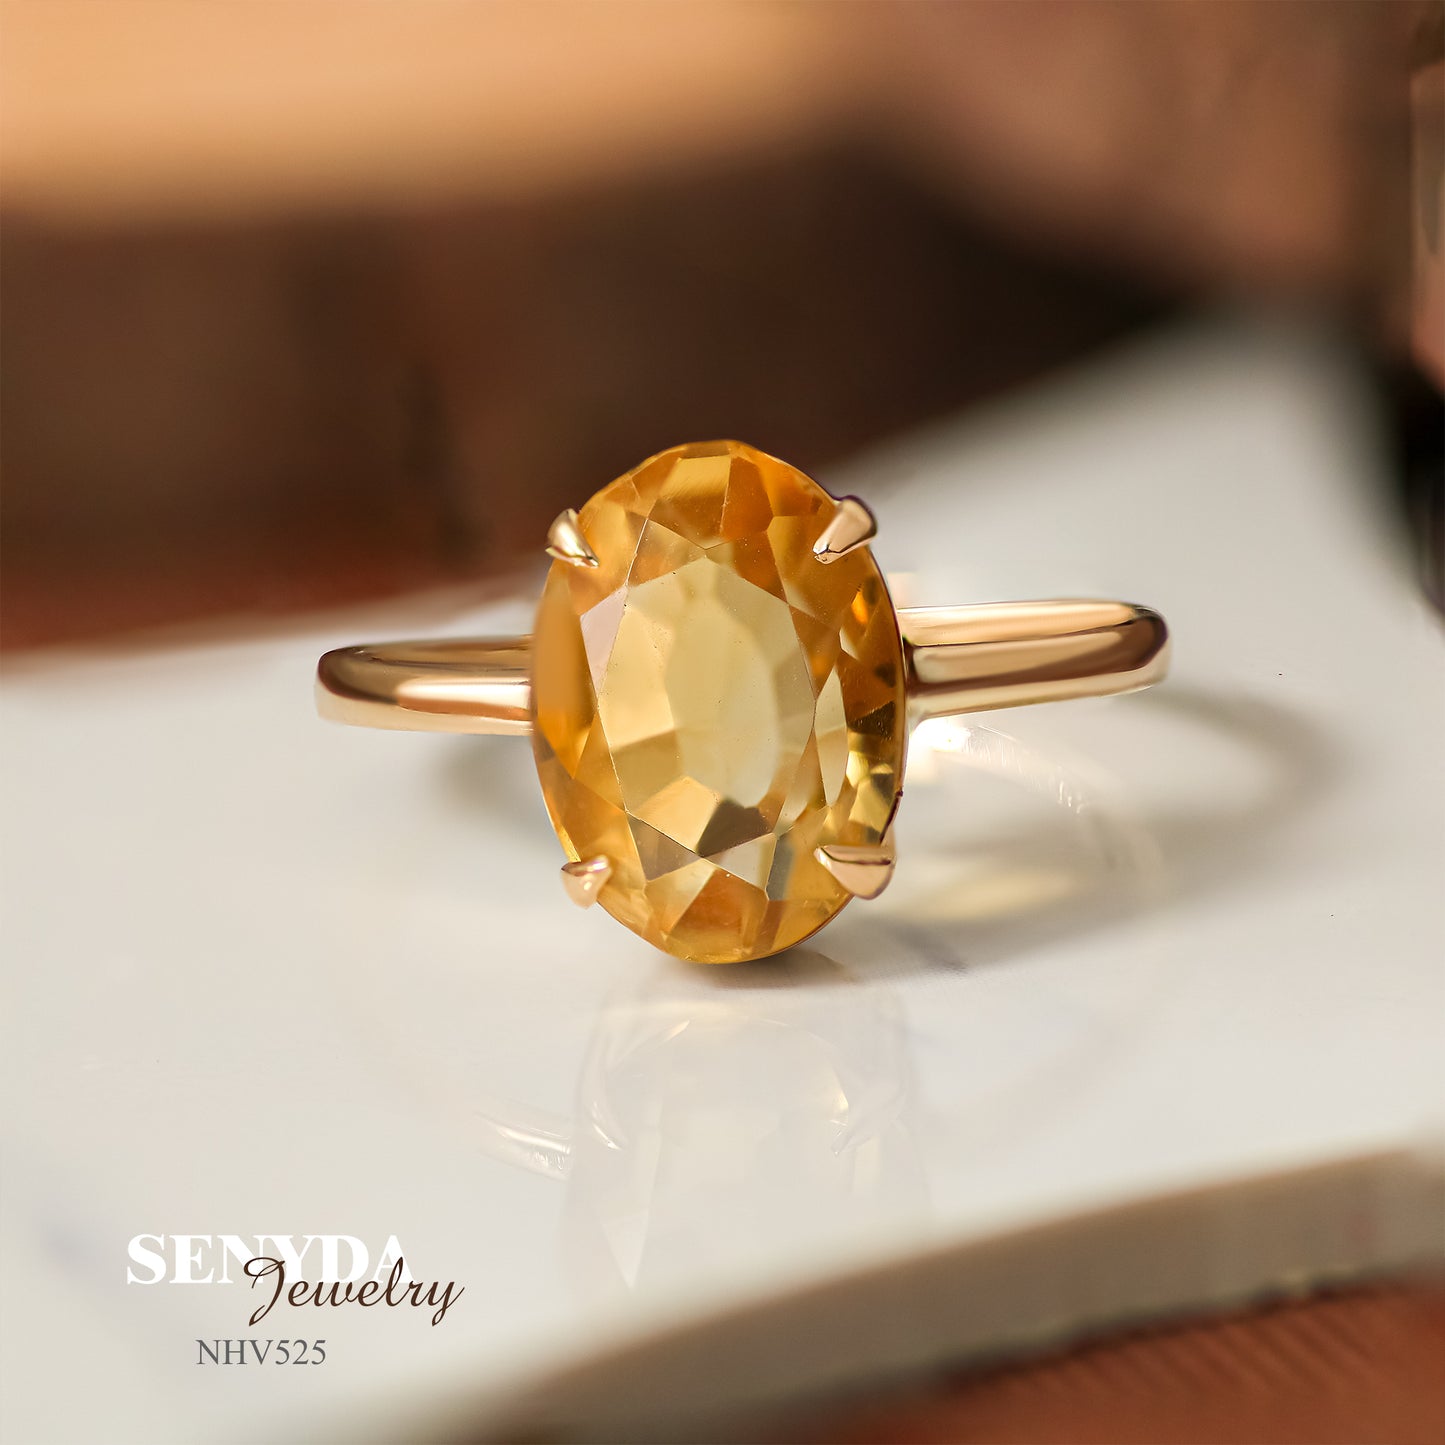 Senyda 16K Solid Gold Oval - Shaped Brilliant Cut Natural Golden Citrine Ring